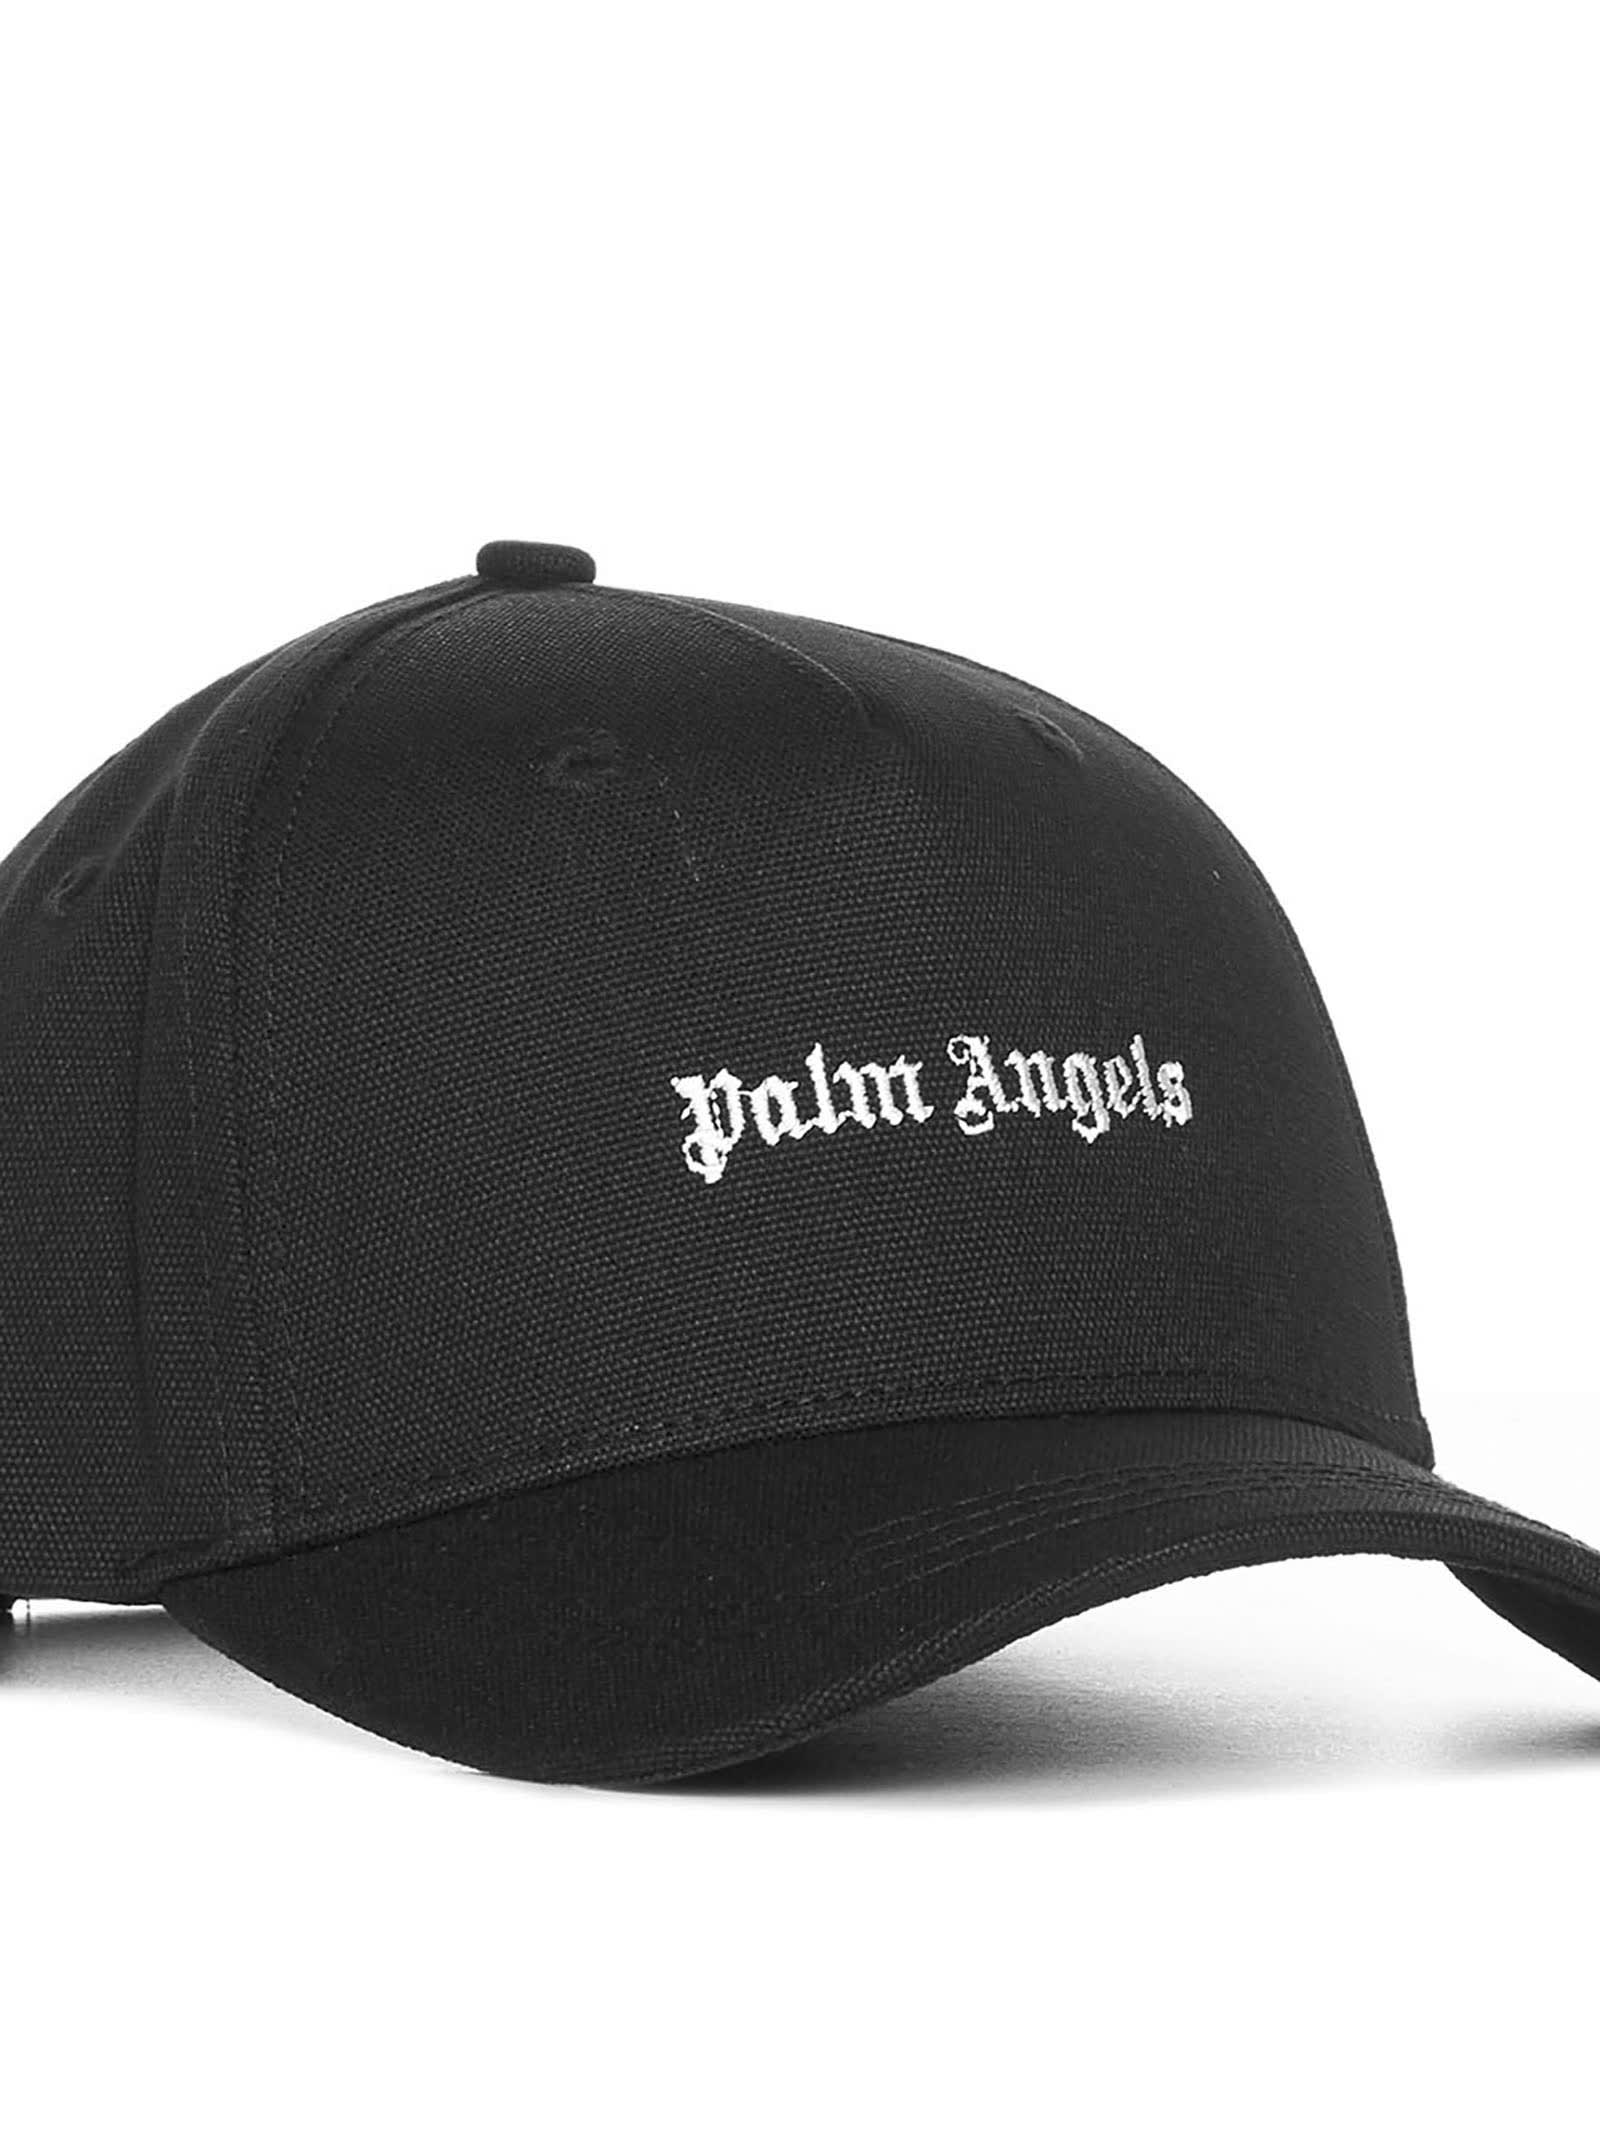 Shop Palm Angels Hat In Black